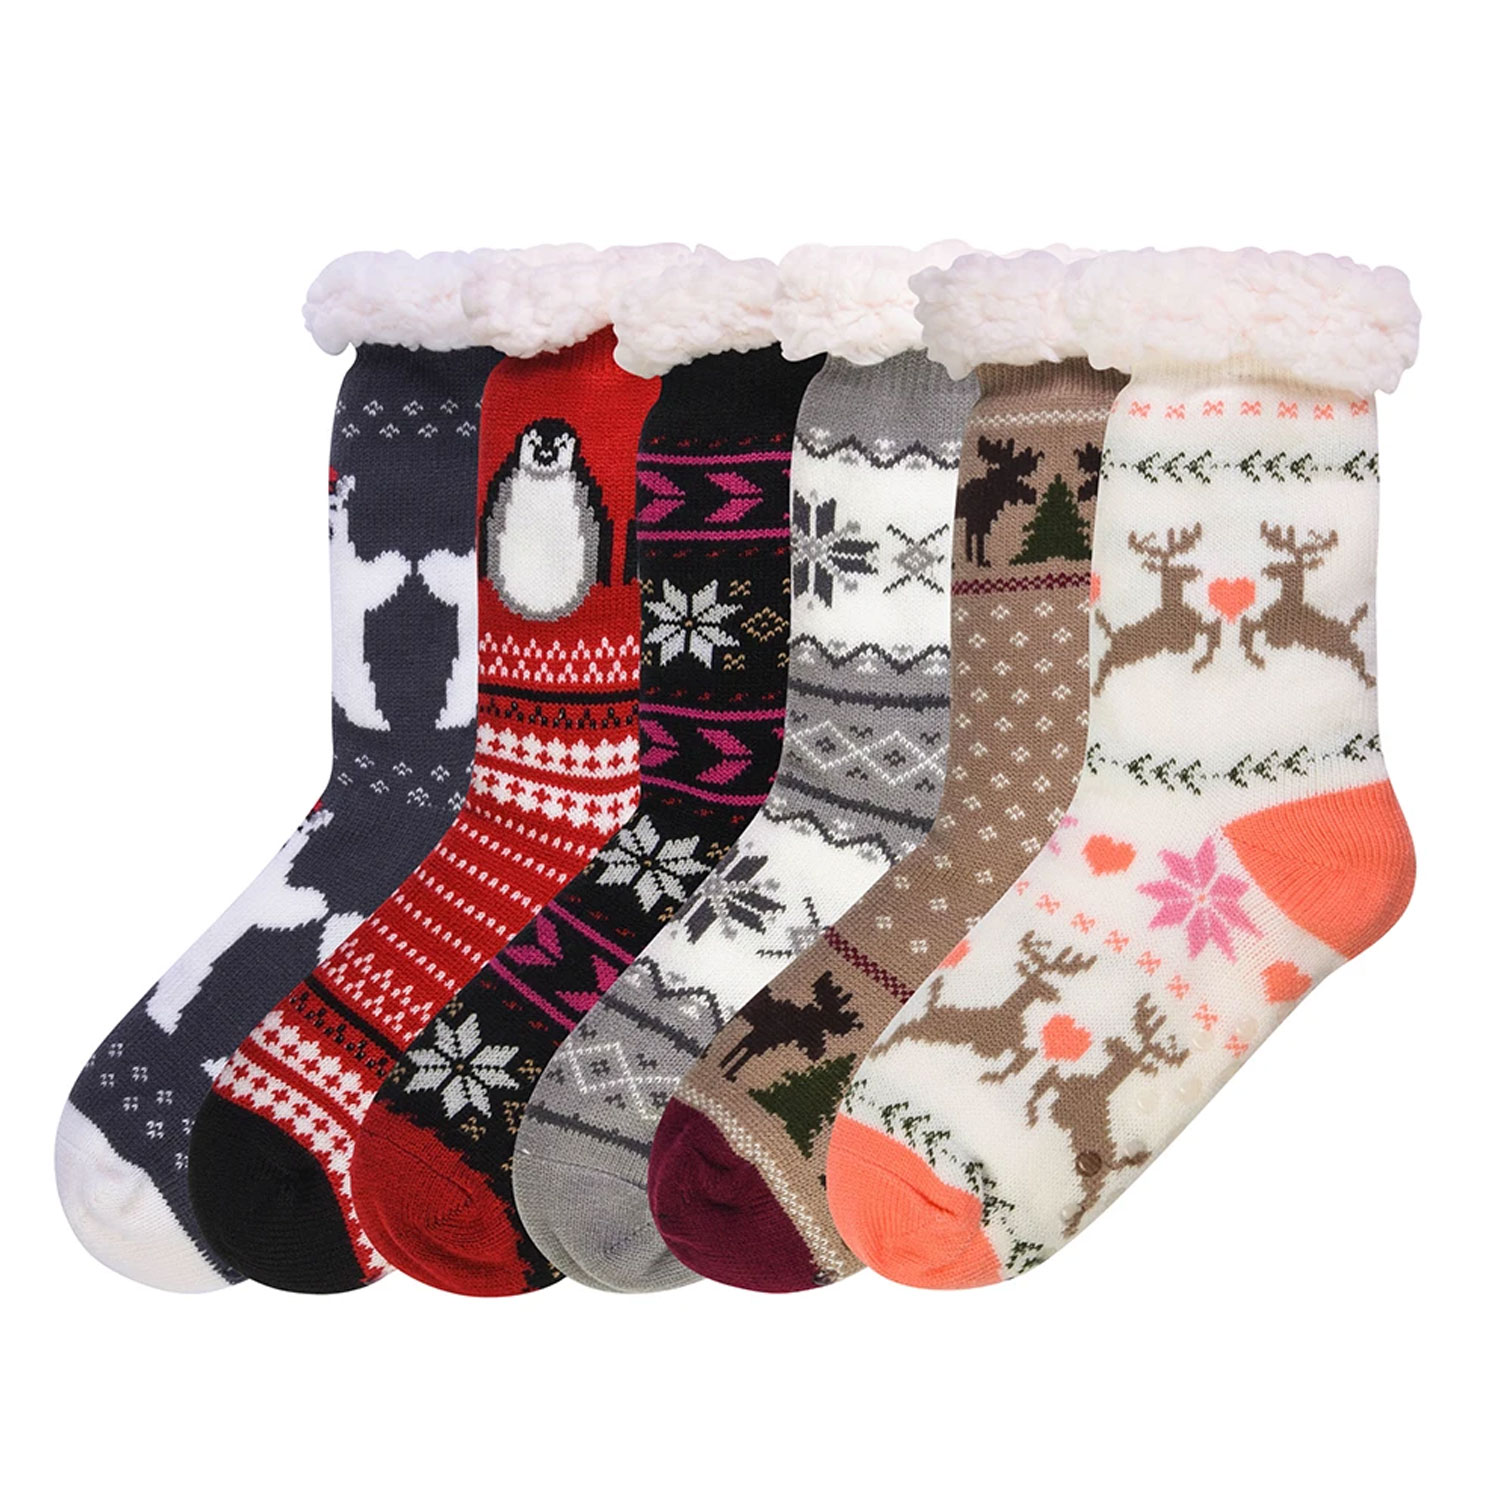 6 Pairs Cozy Thermal Non-Skid Socks